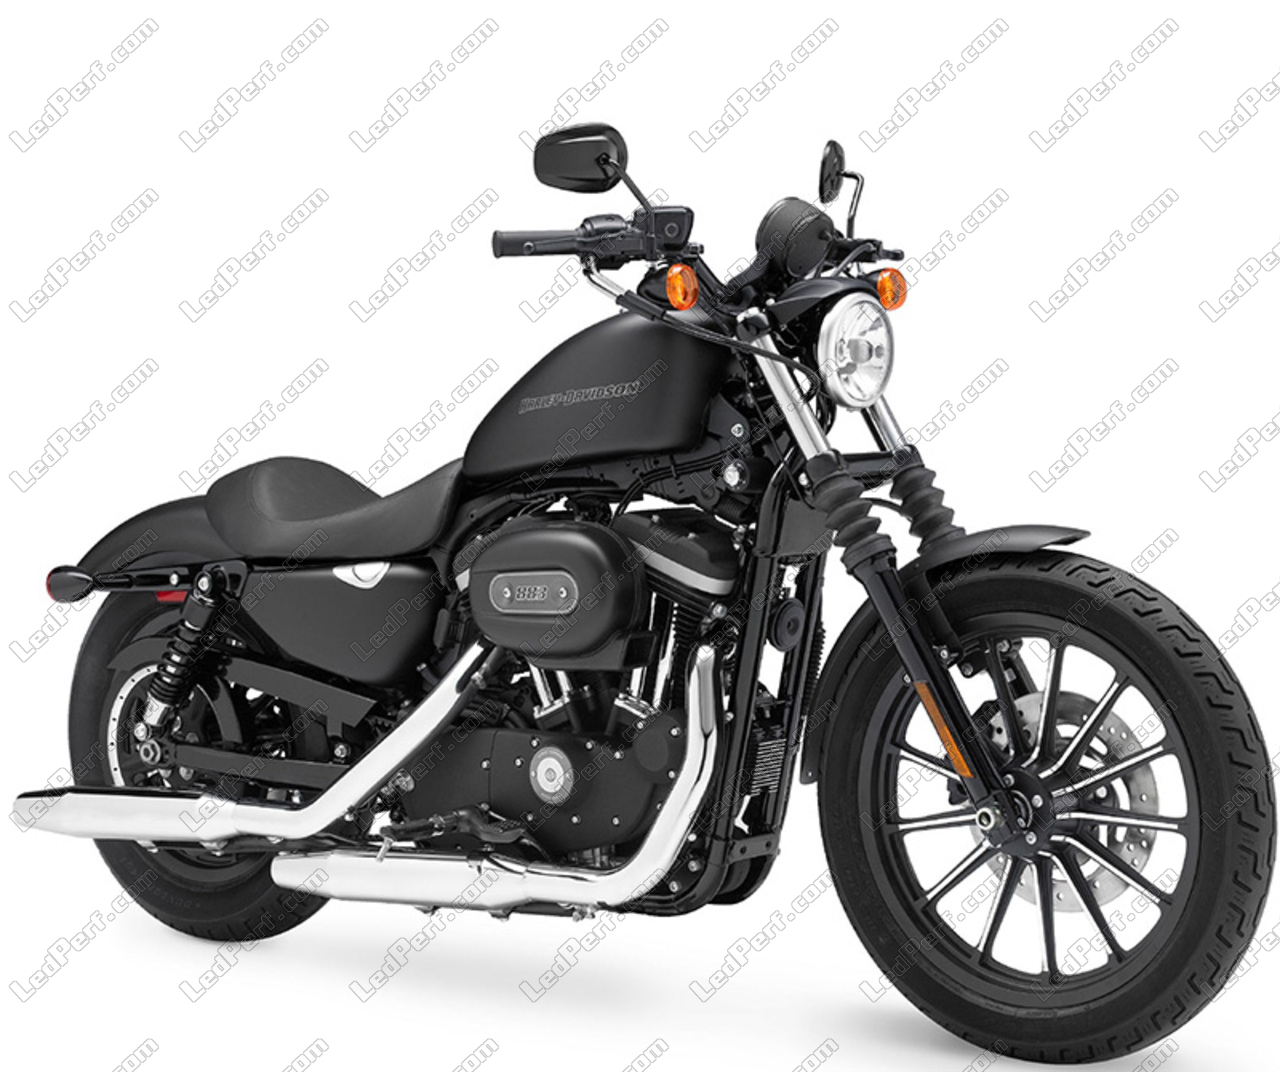 Round Led Headlight For Harley Davidson Iron 883 2007 2015 5 Year Warranty